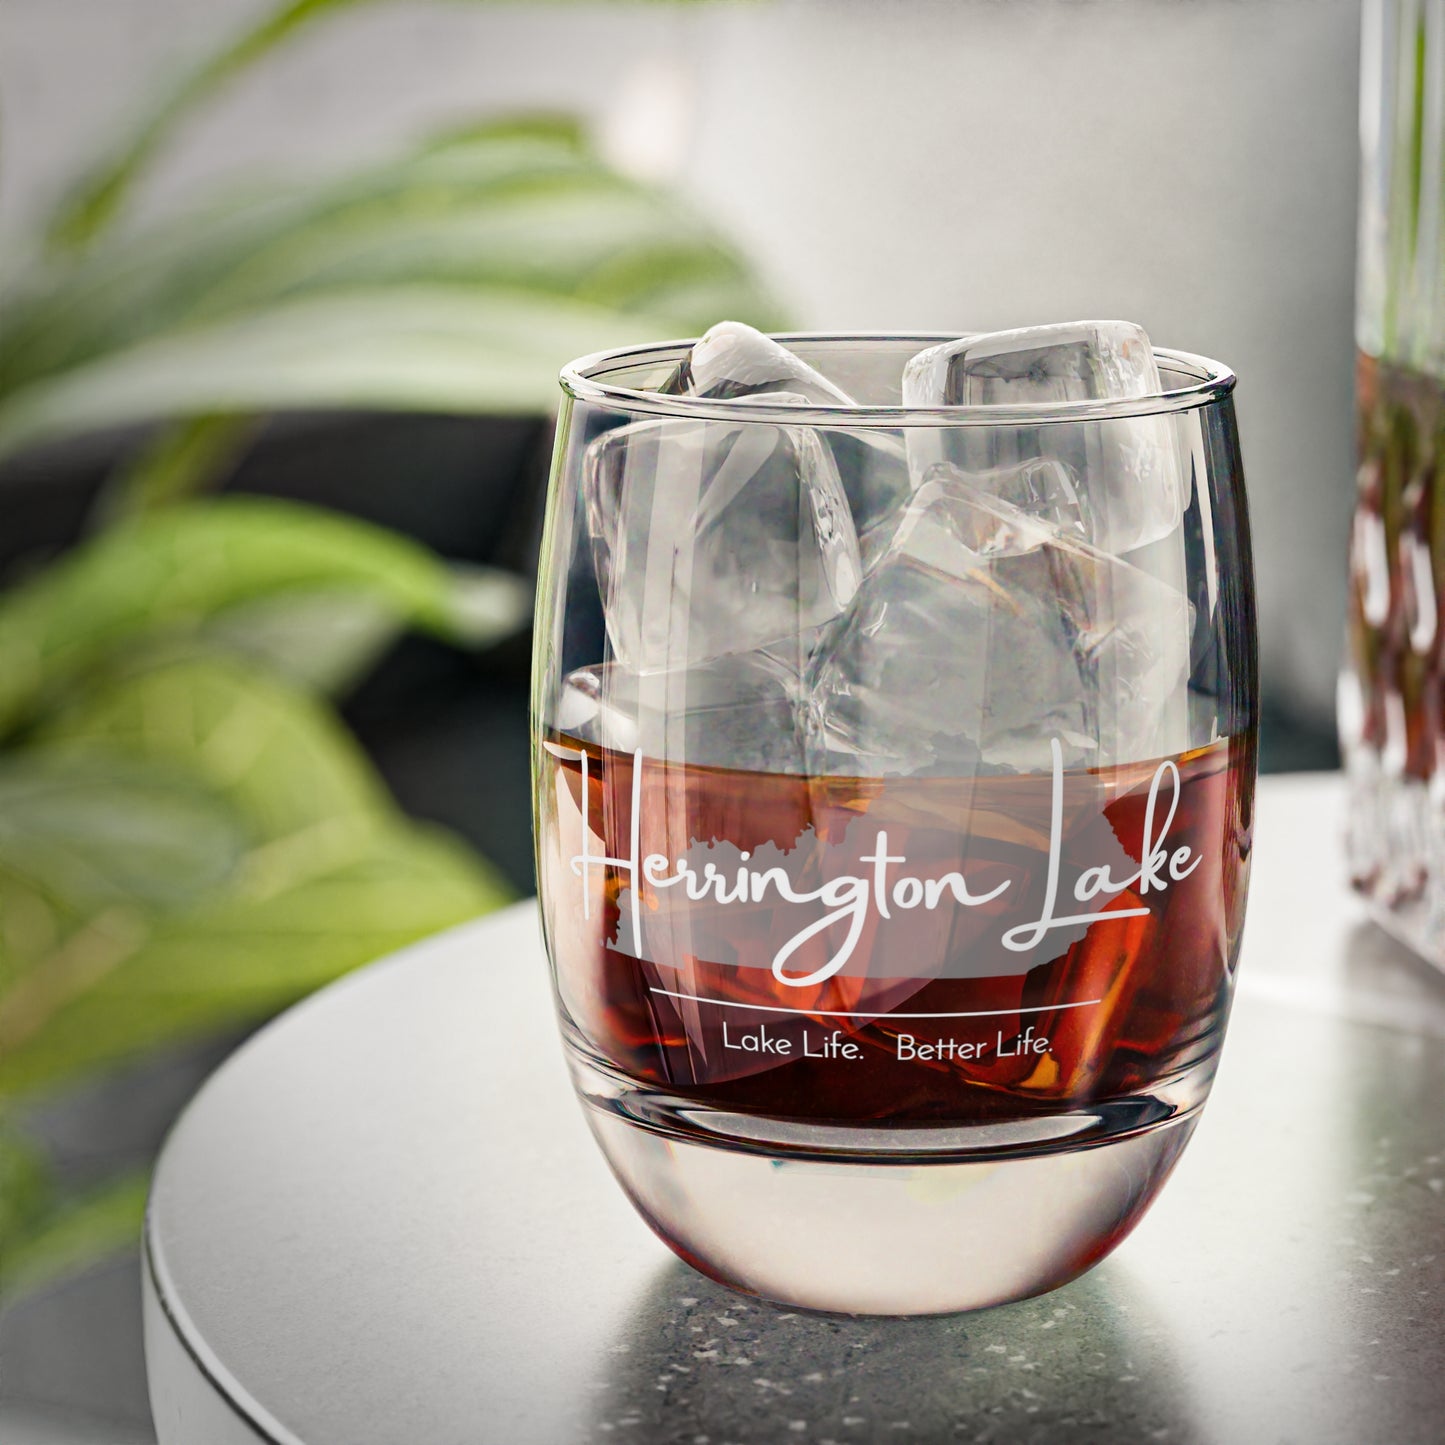 Herrington Lake Signature Whiskey Glass, 6oz (White/Grey)